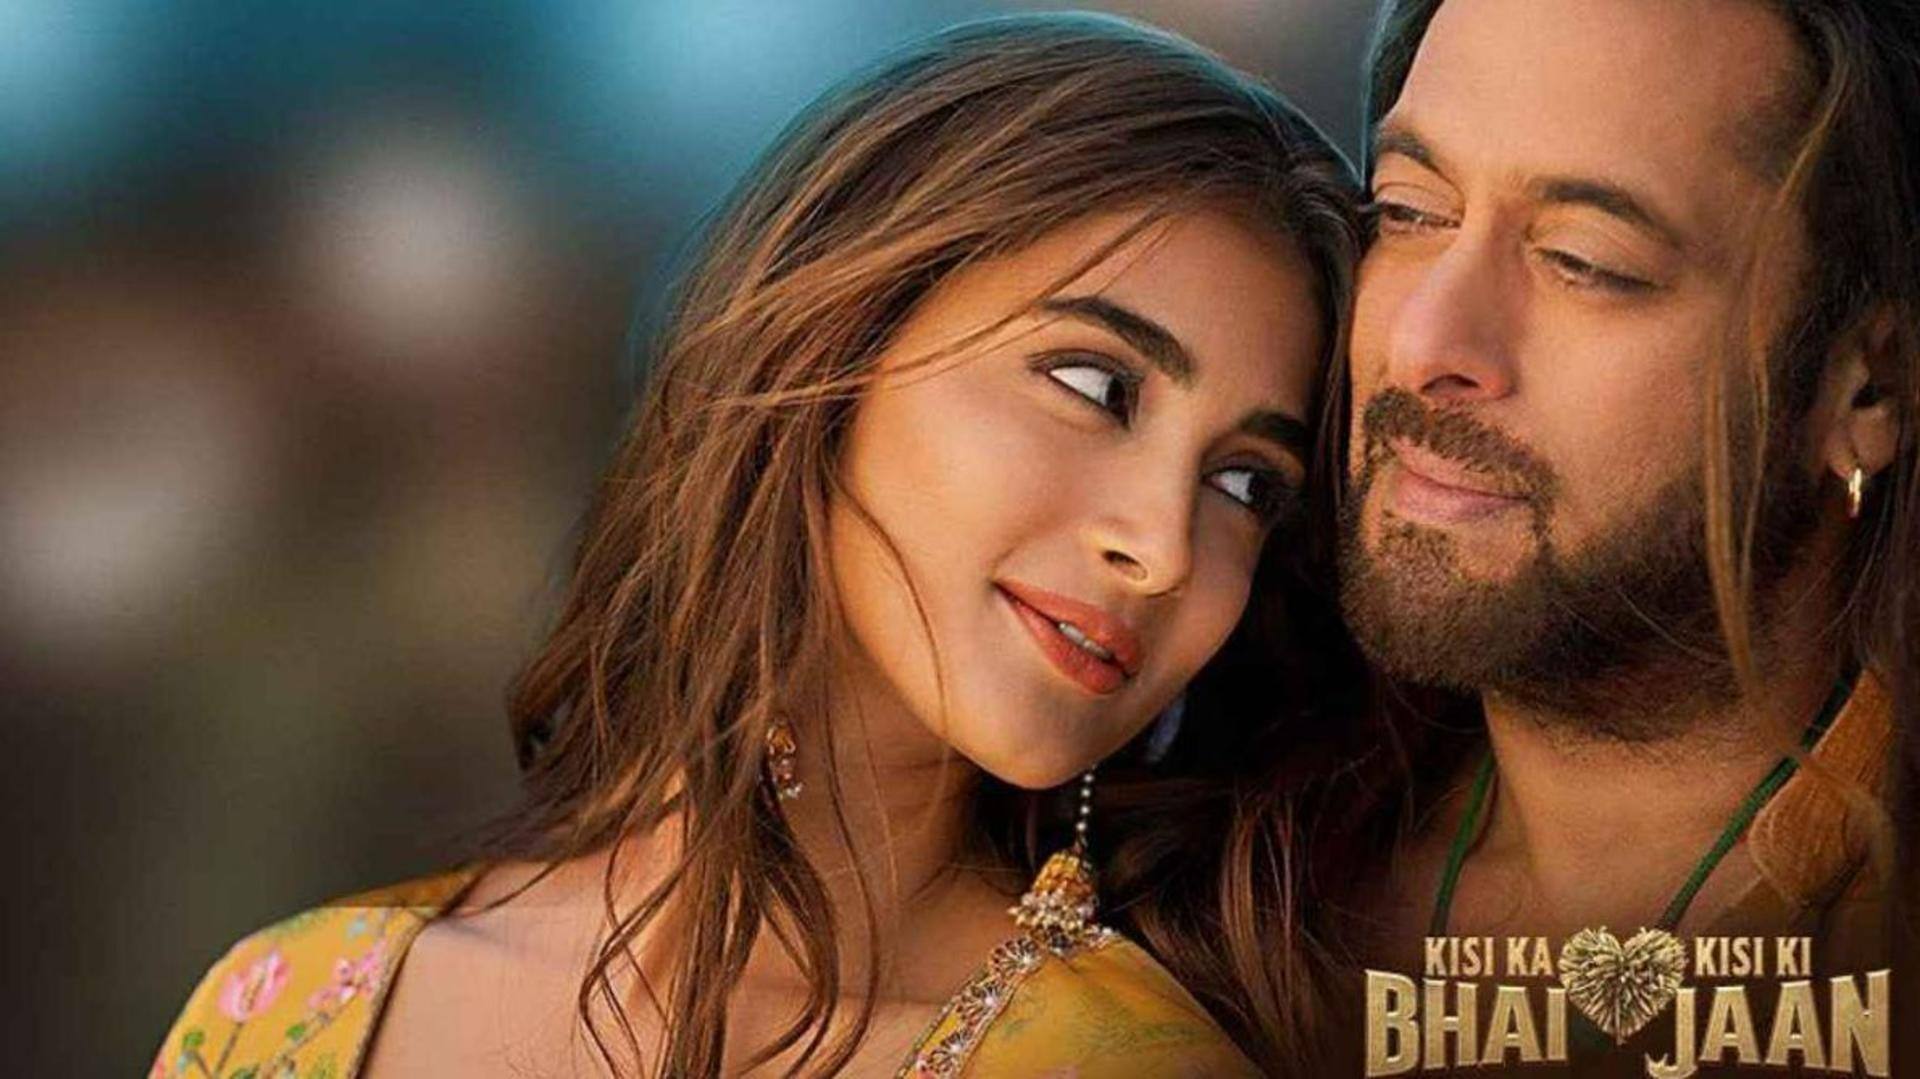 Box office: Salman Khan's 'KKBKKJ' falters with no hope